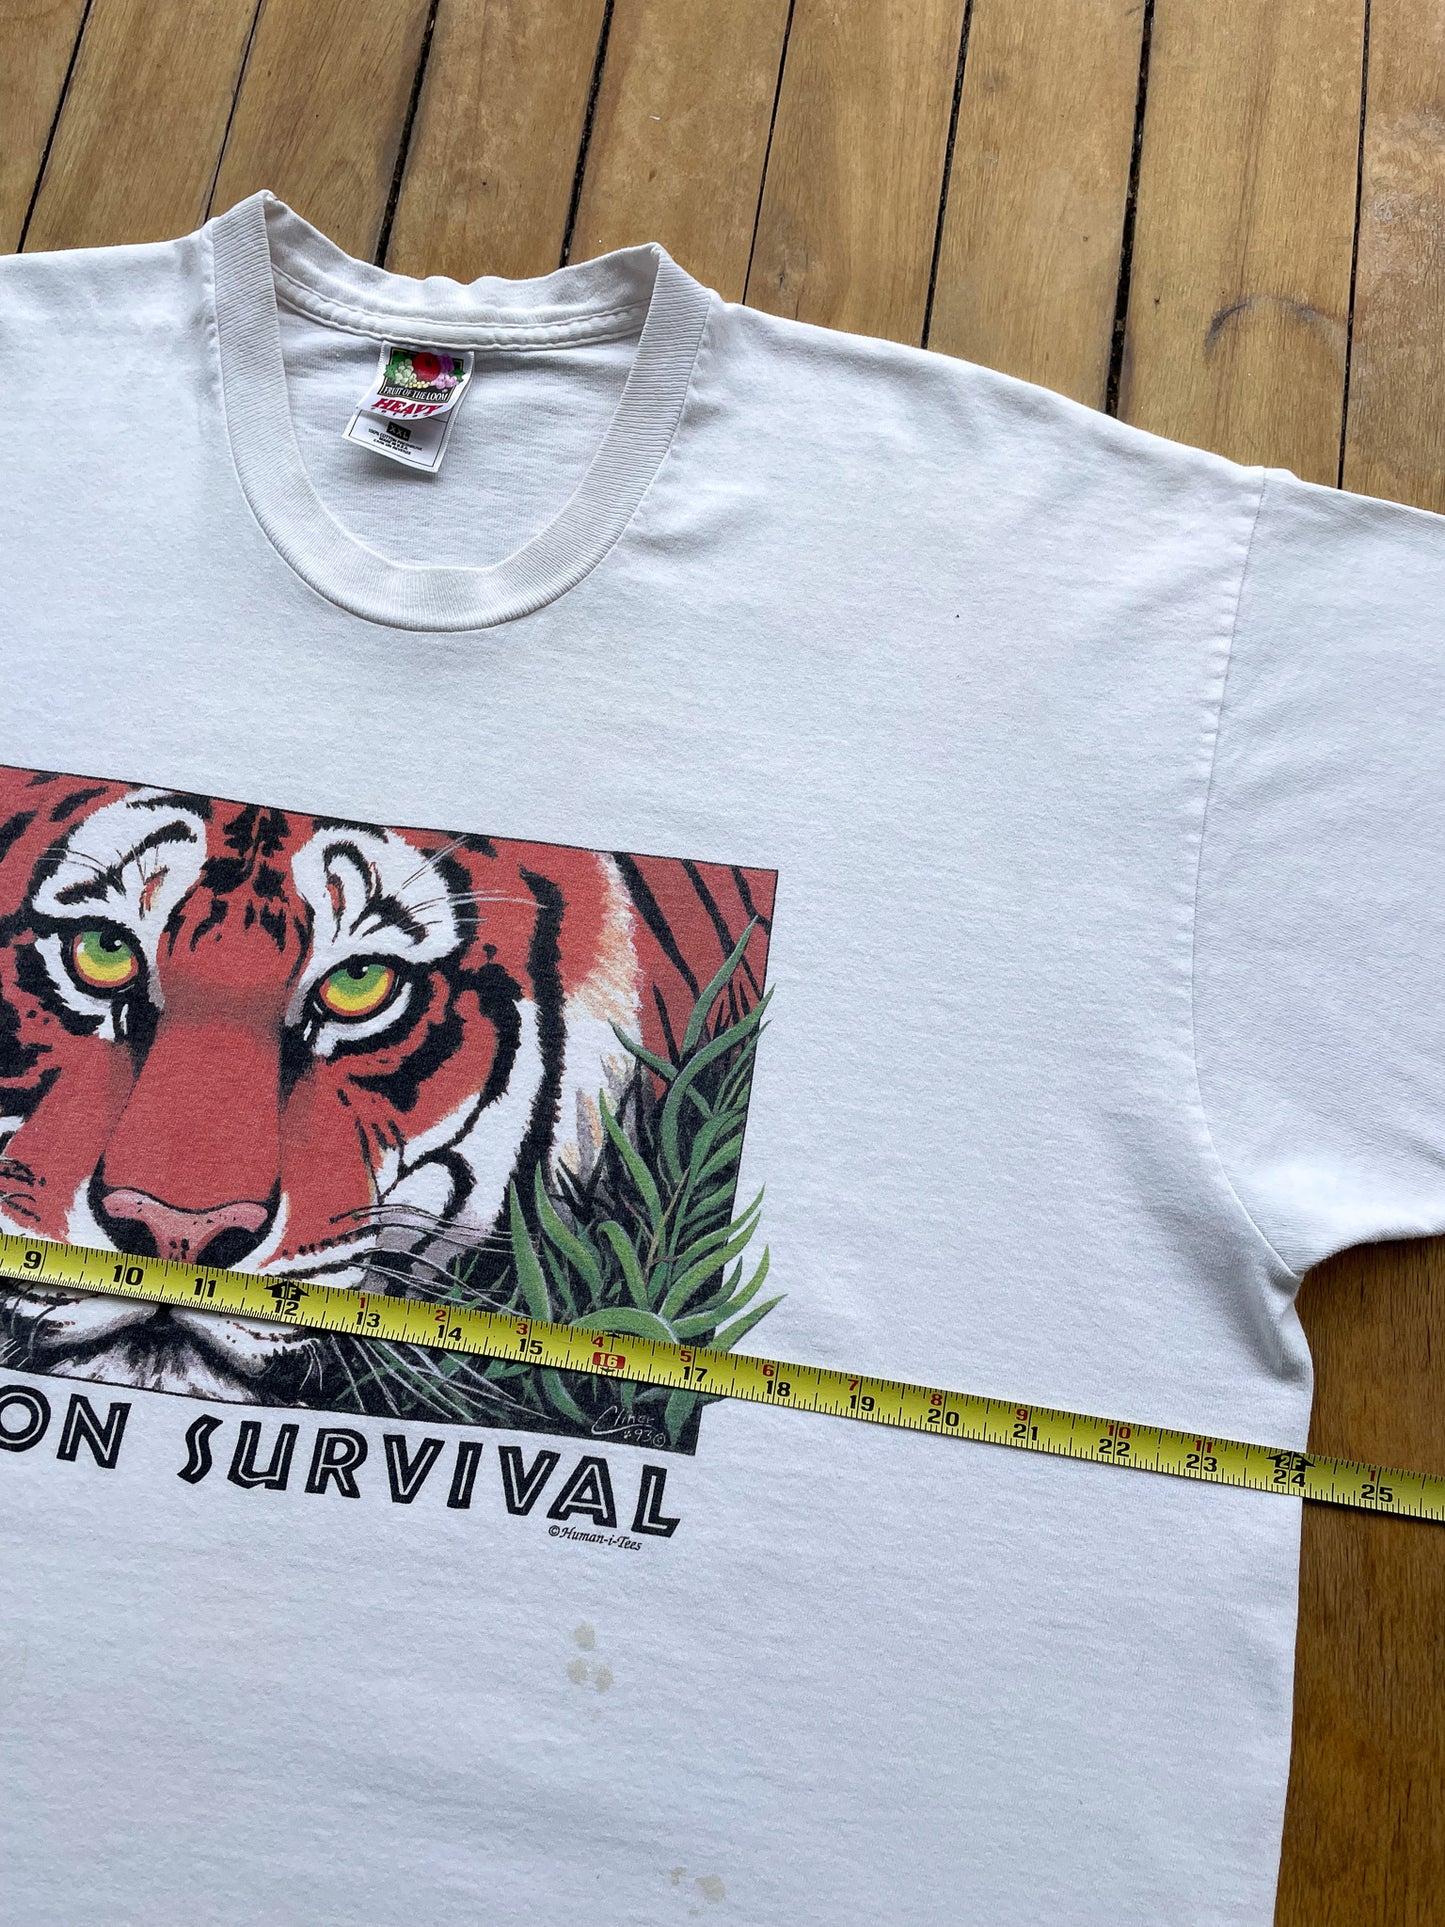 "Eye On Survival" T-Shirt—[XXL]